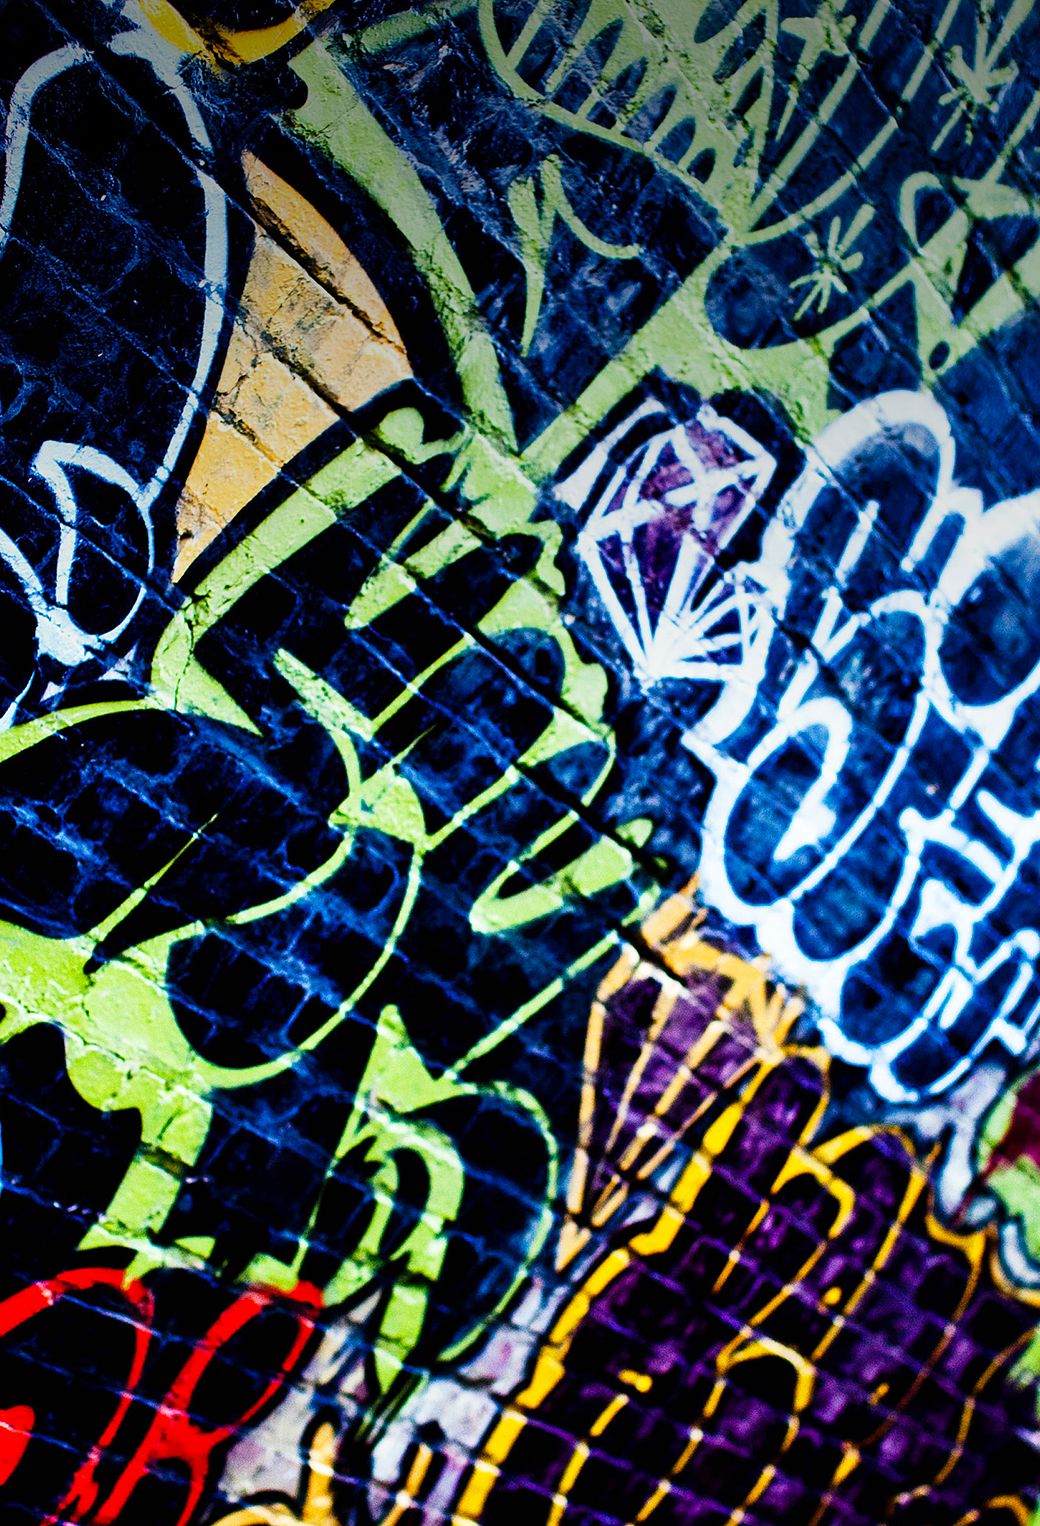 Wallpaper ID 1726379  1080P colors graff cities wall illegal  buildings art graffiti canada street city toronto free download